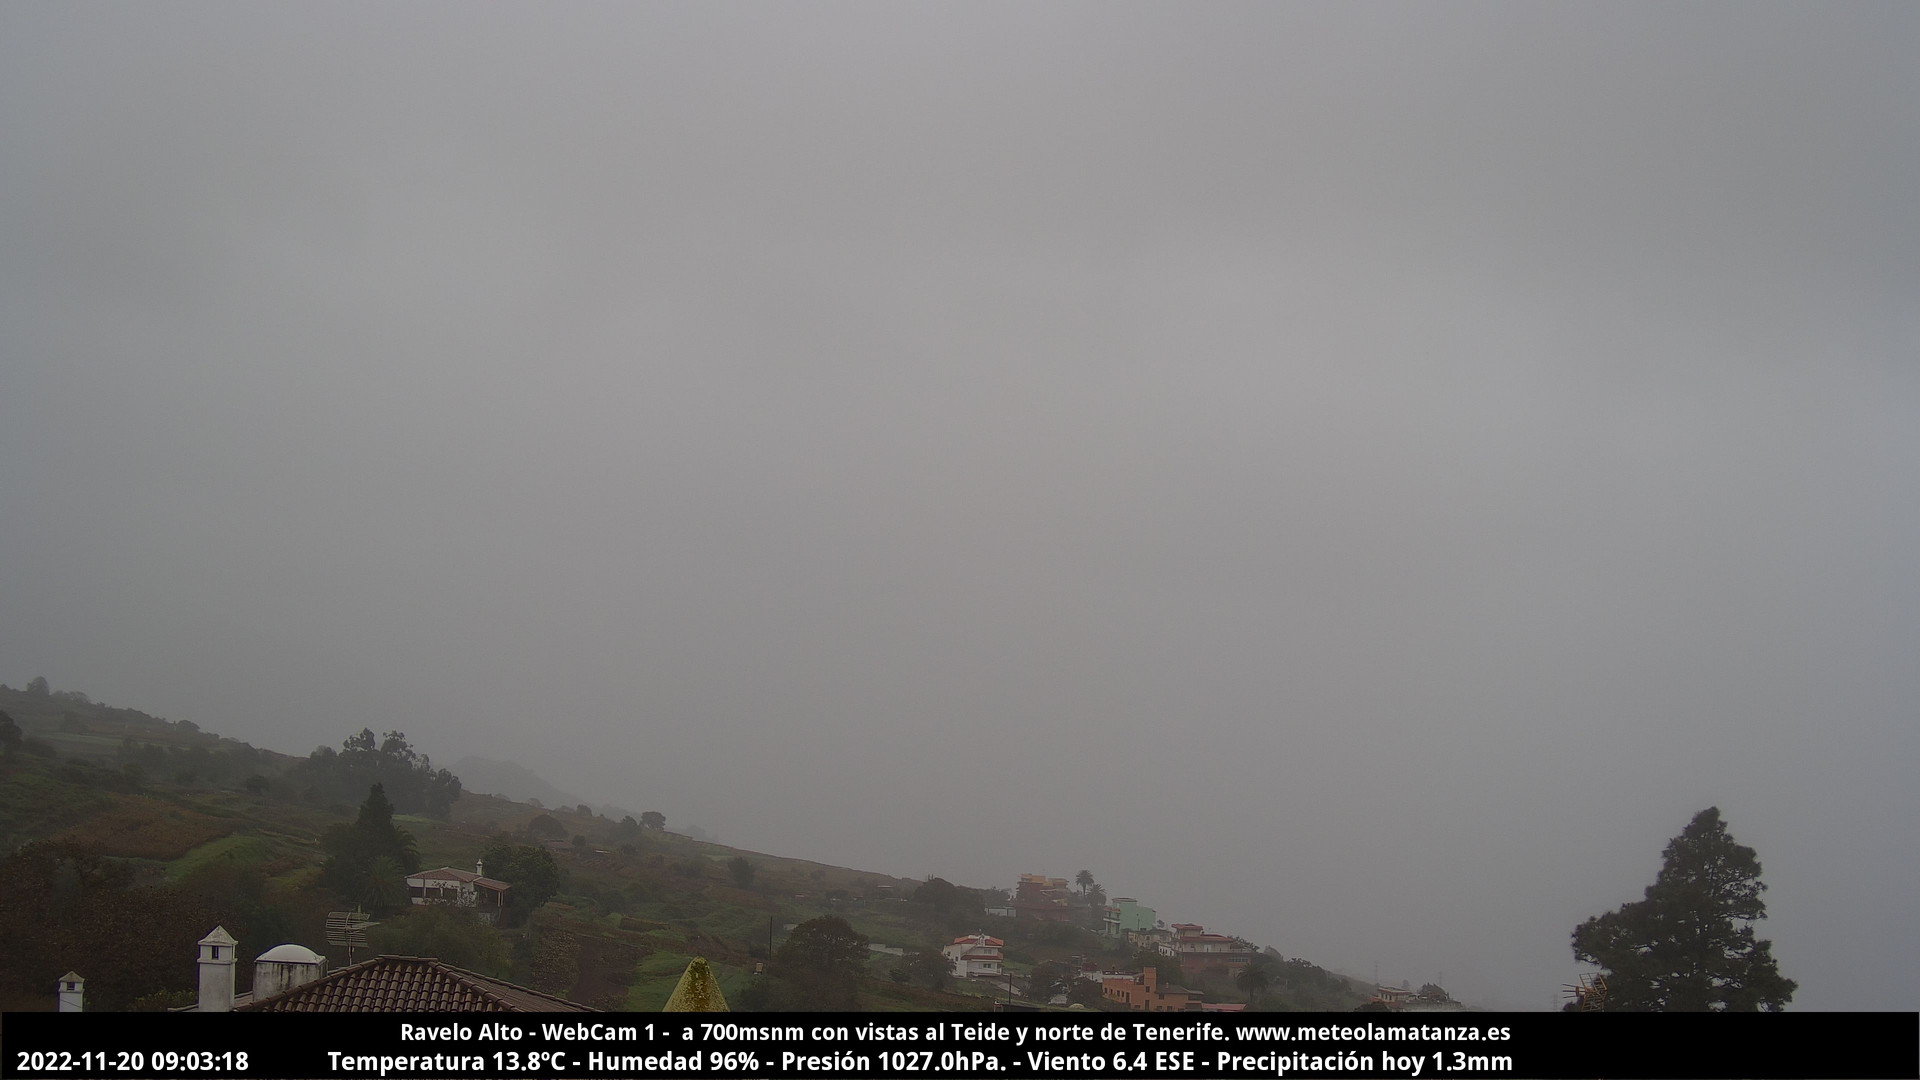 time-lapse frame, MeteoRavelo- Visión N de Tenerife webcam